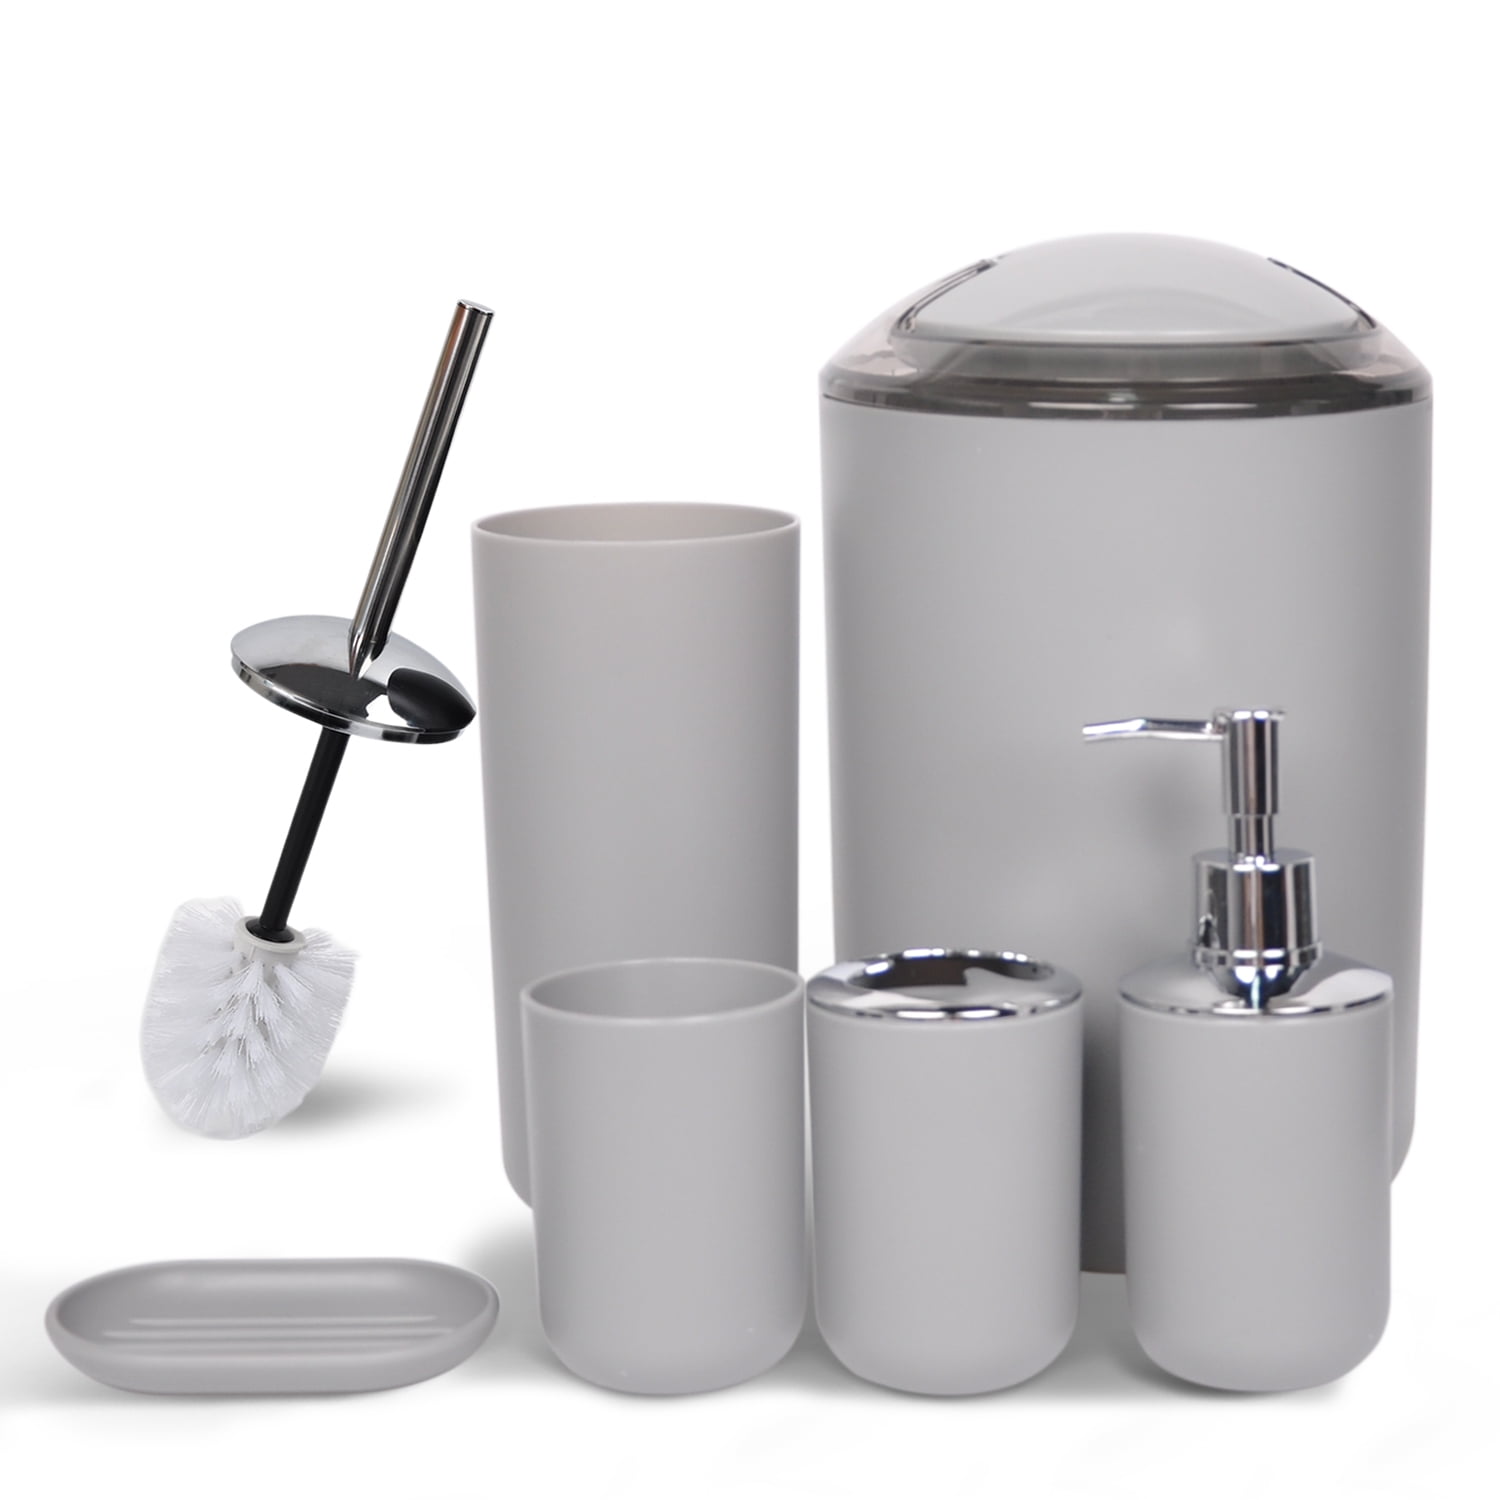 CERBIOR Bathroom Accessories Set Bath Ensemble Includes Soap Dispenser, Toothbrush Holder, Tumbler, Soap Dish for Decorative Countertop and Housewarming Gift (Grey)